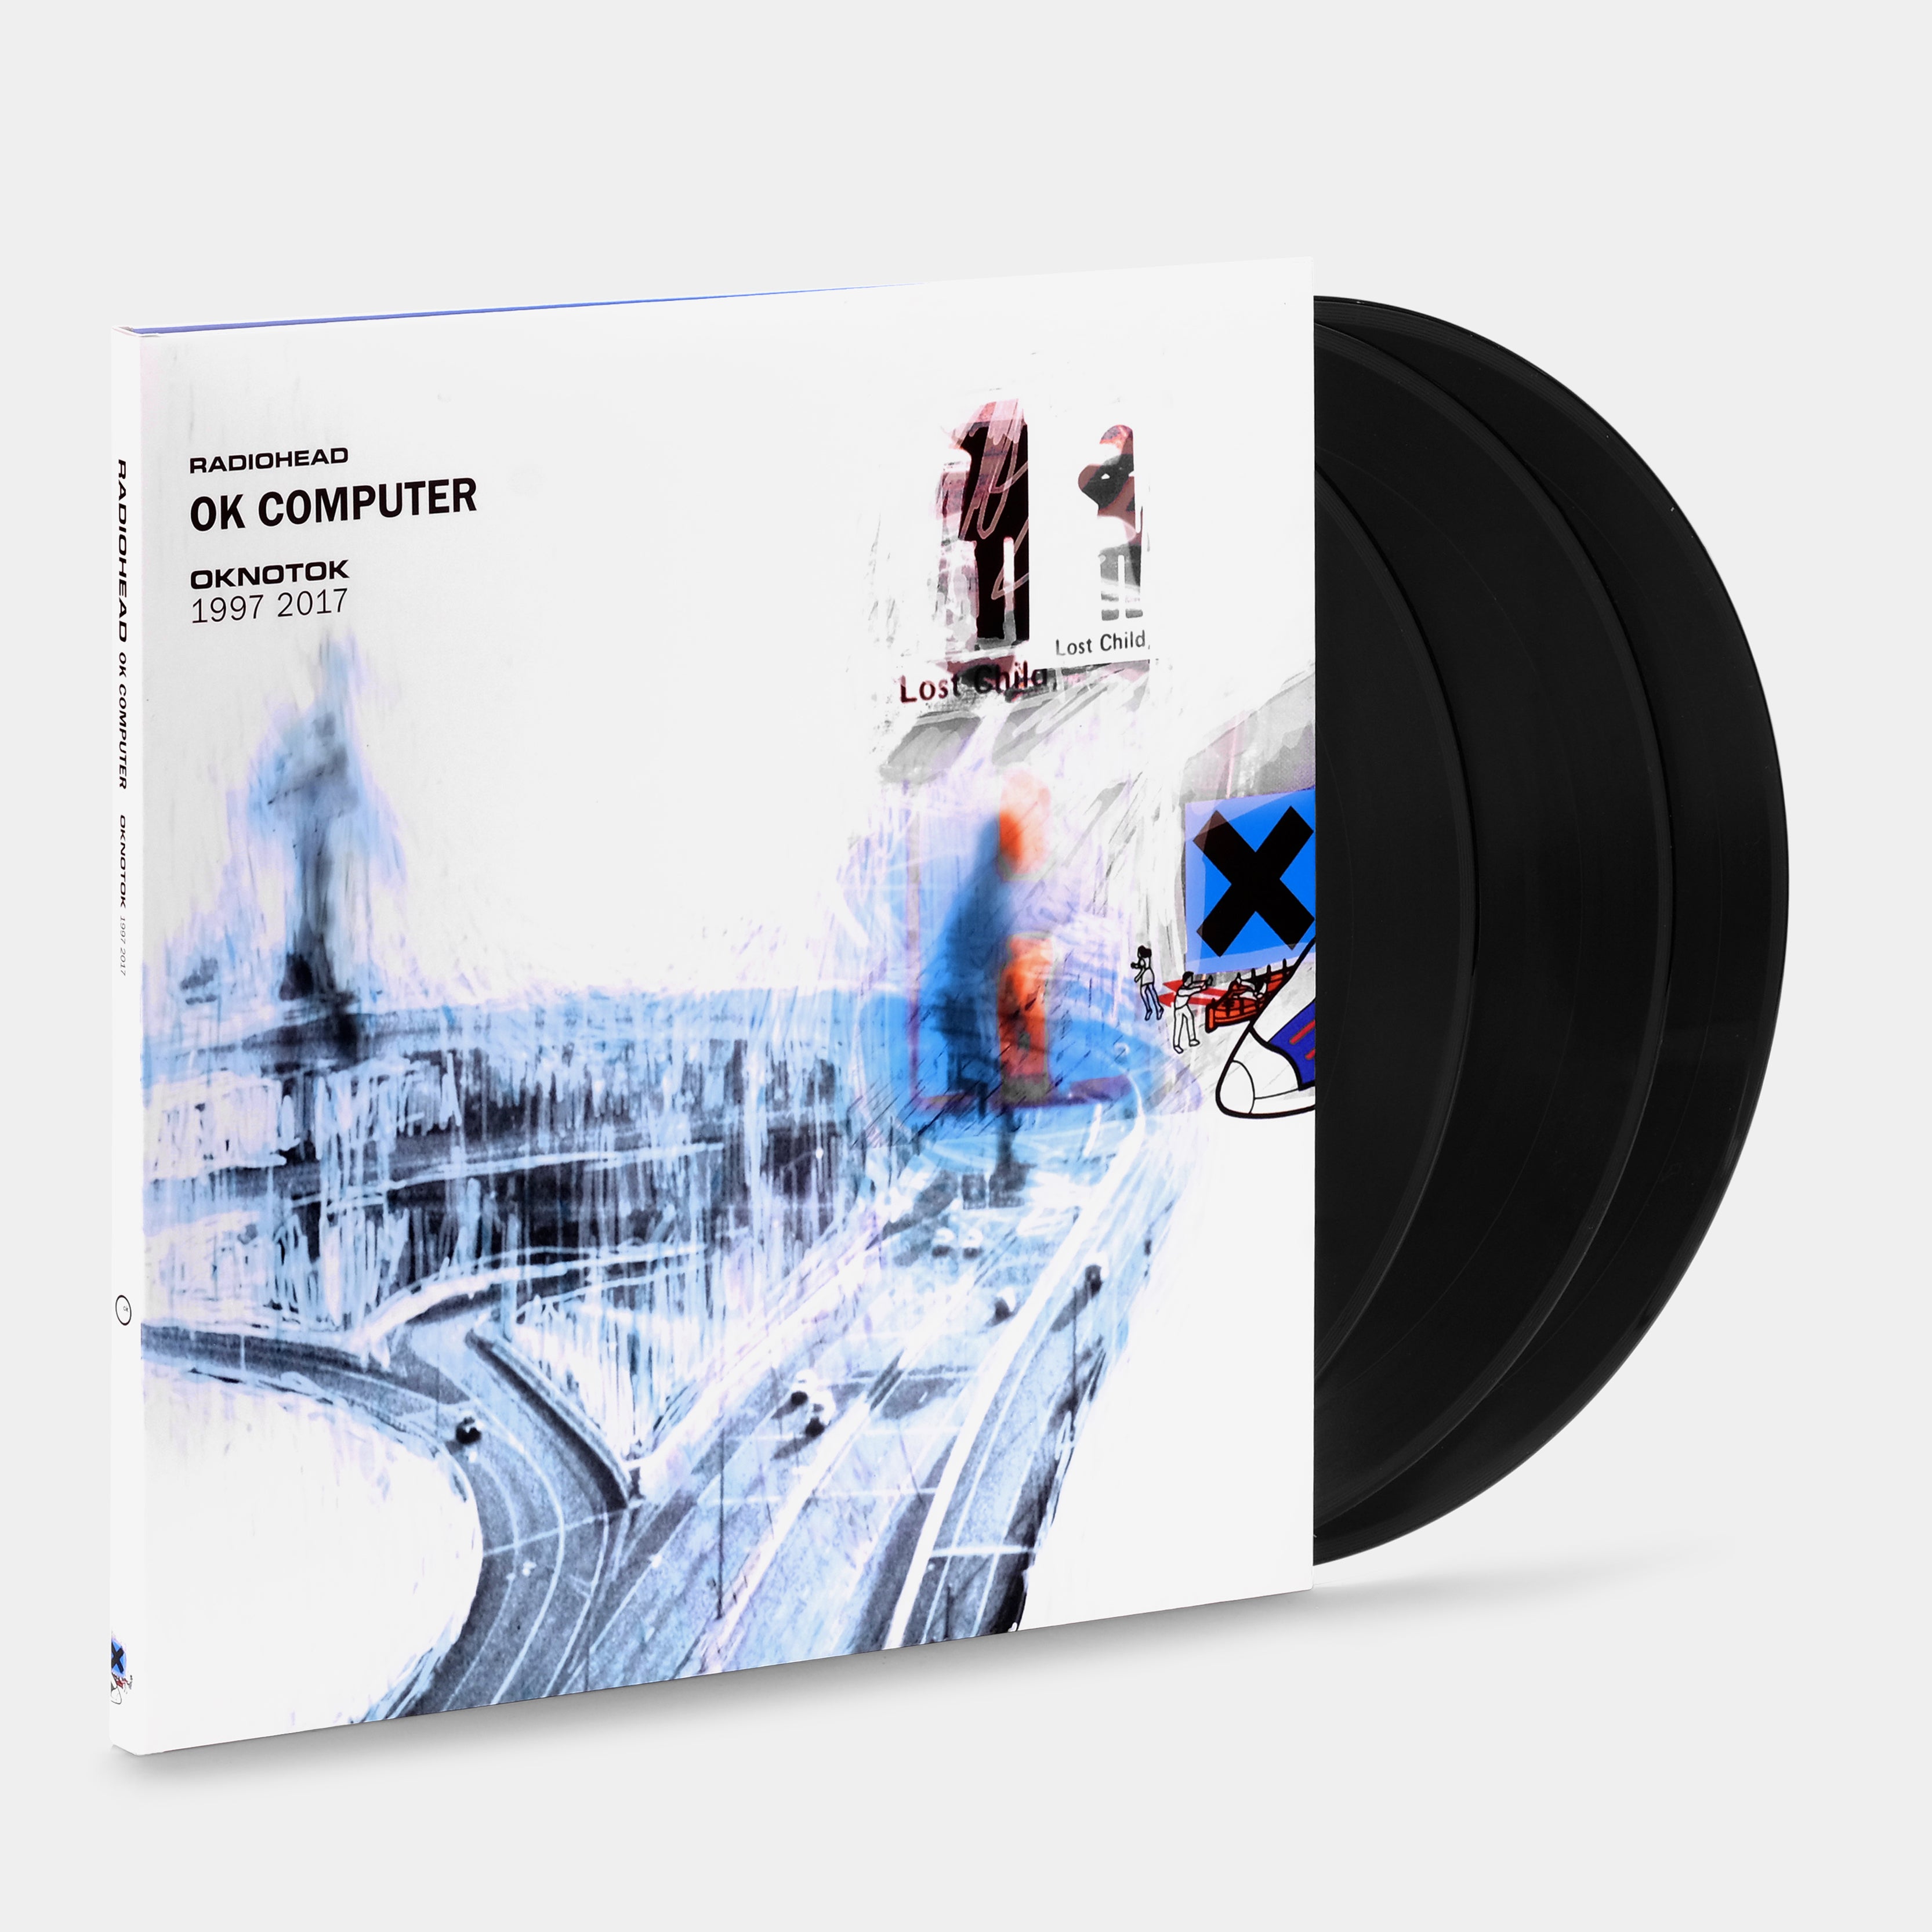 Radiohead - OK Computer OKNOTOK 1997 2017 3xLP Vinyl Record